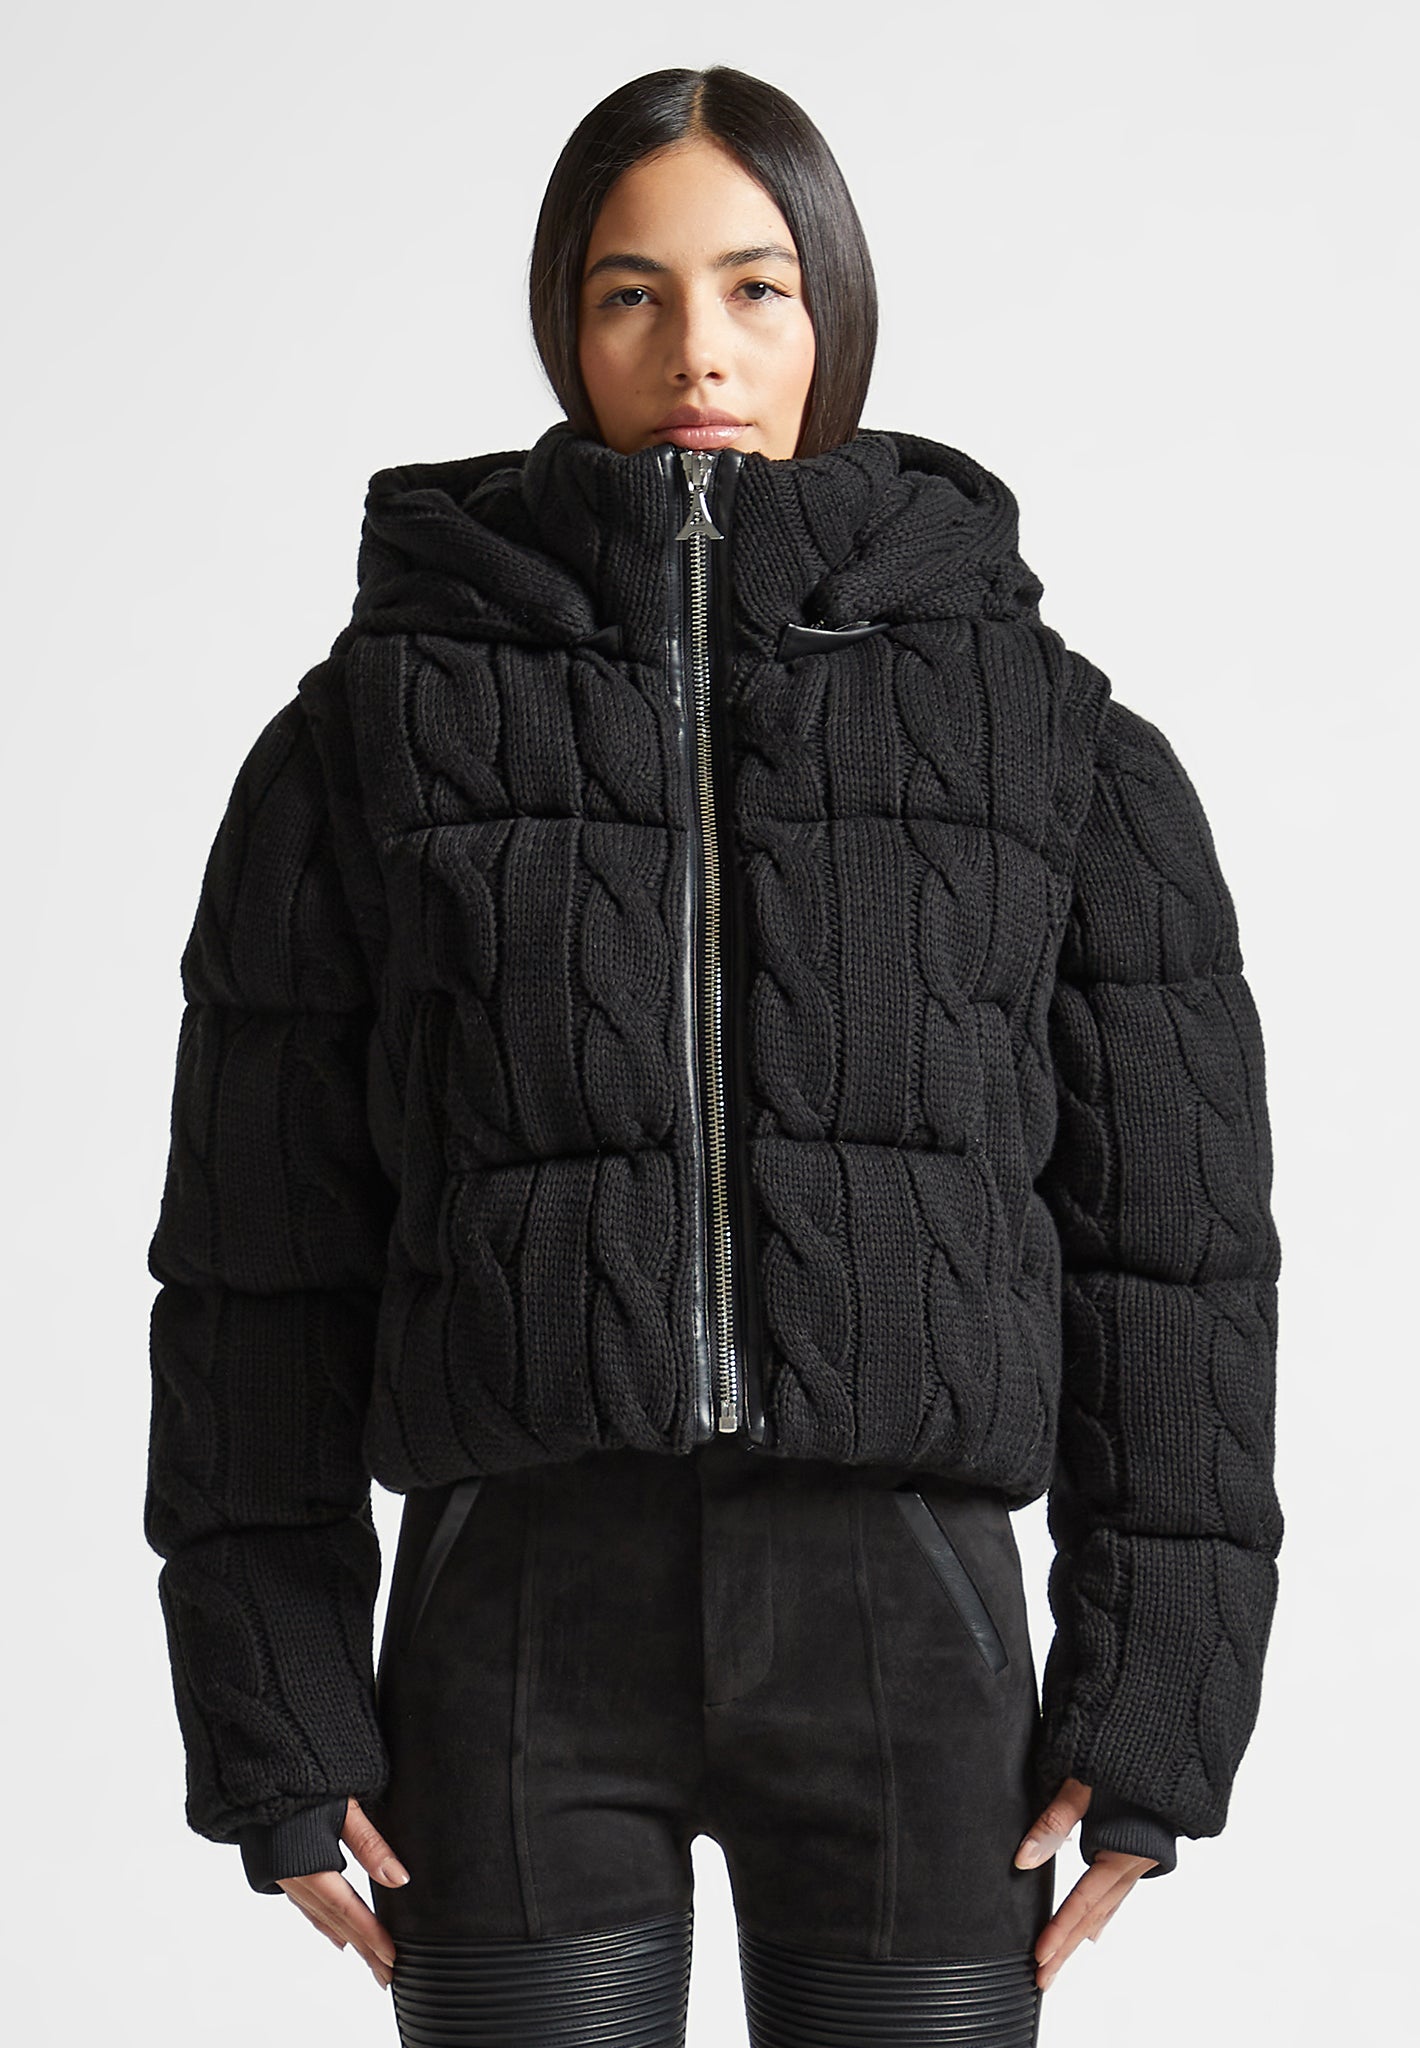 Buy COODRONY X-Long Fashion Slim Women Winter Jacket Cotton Padded